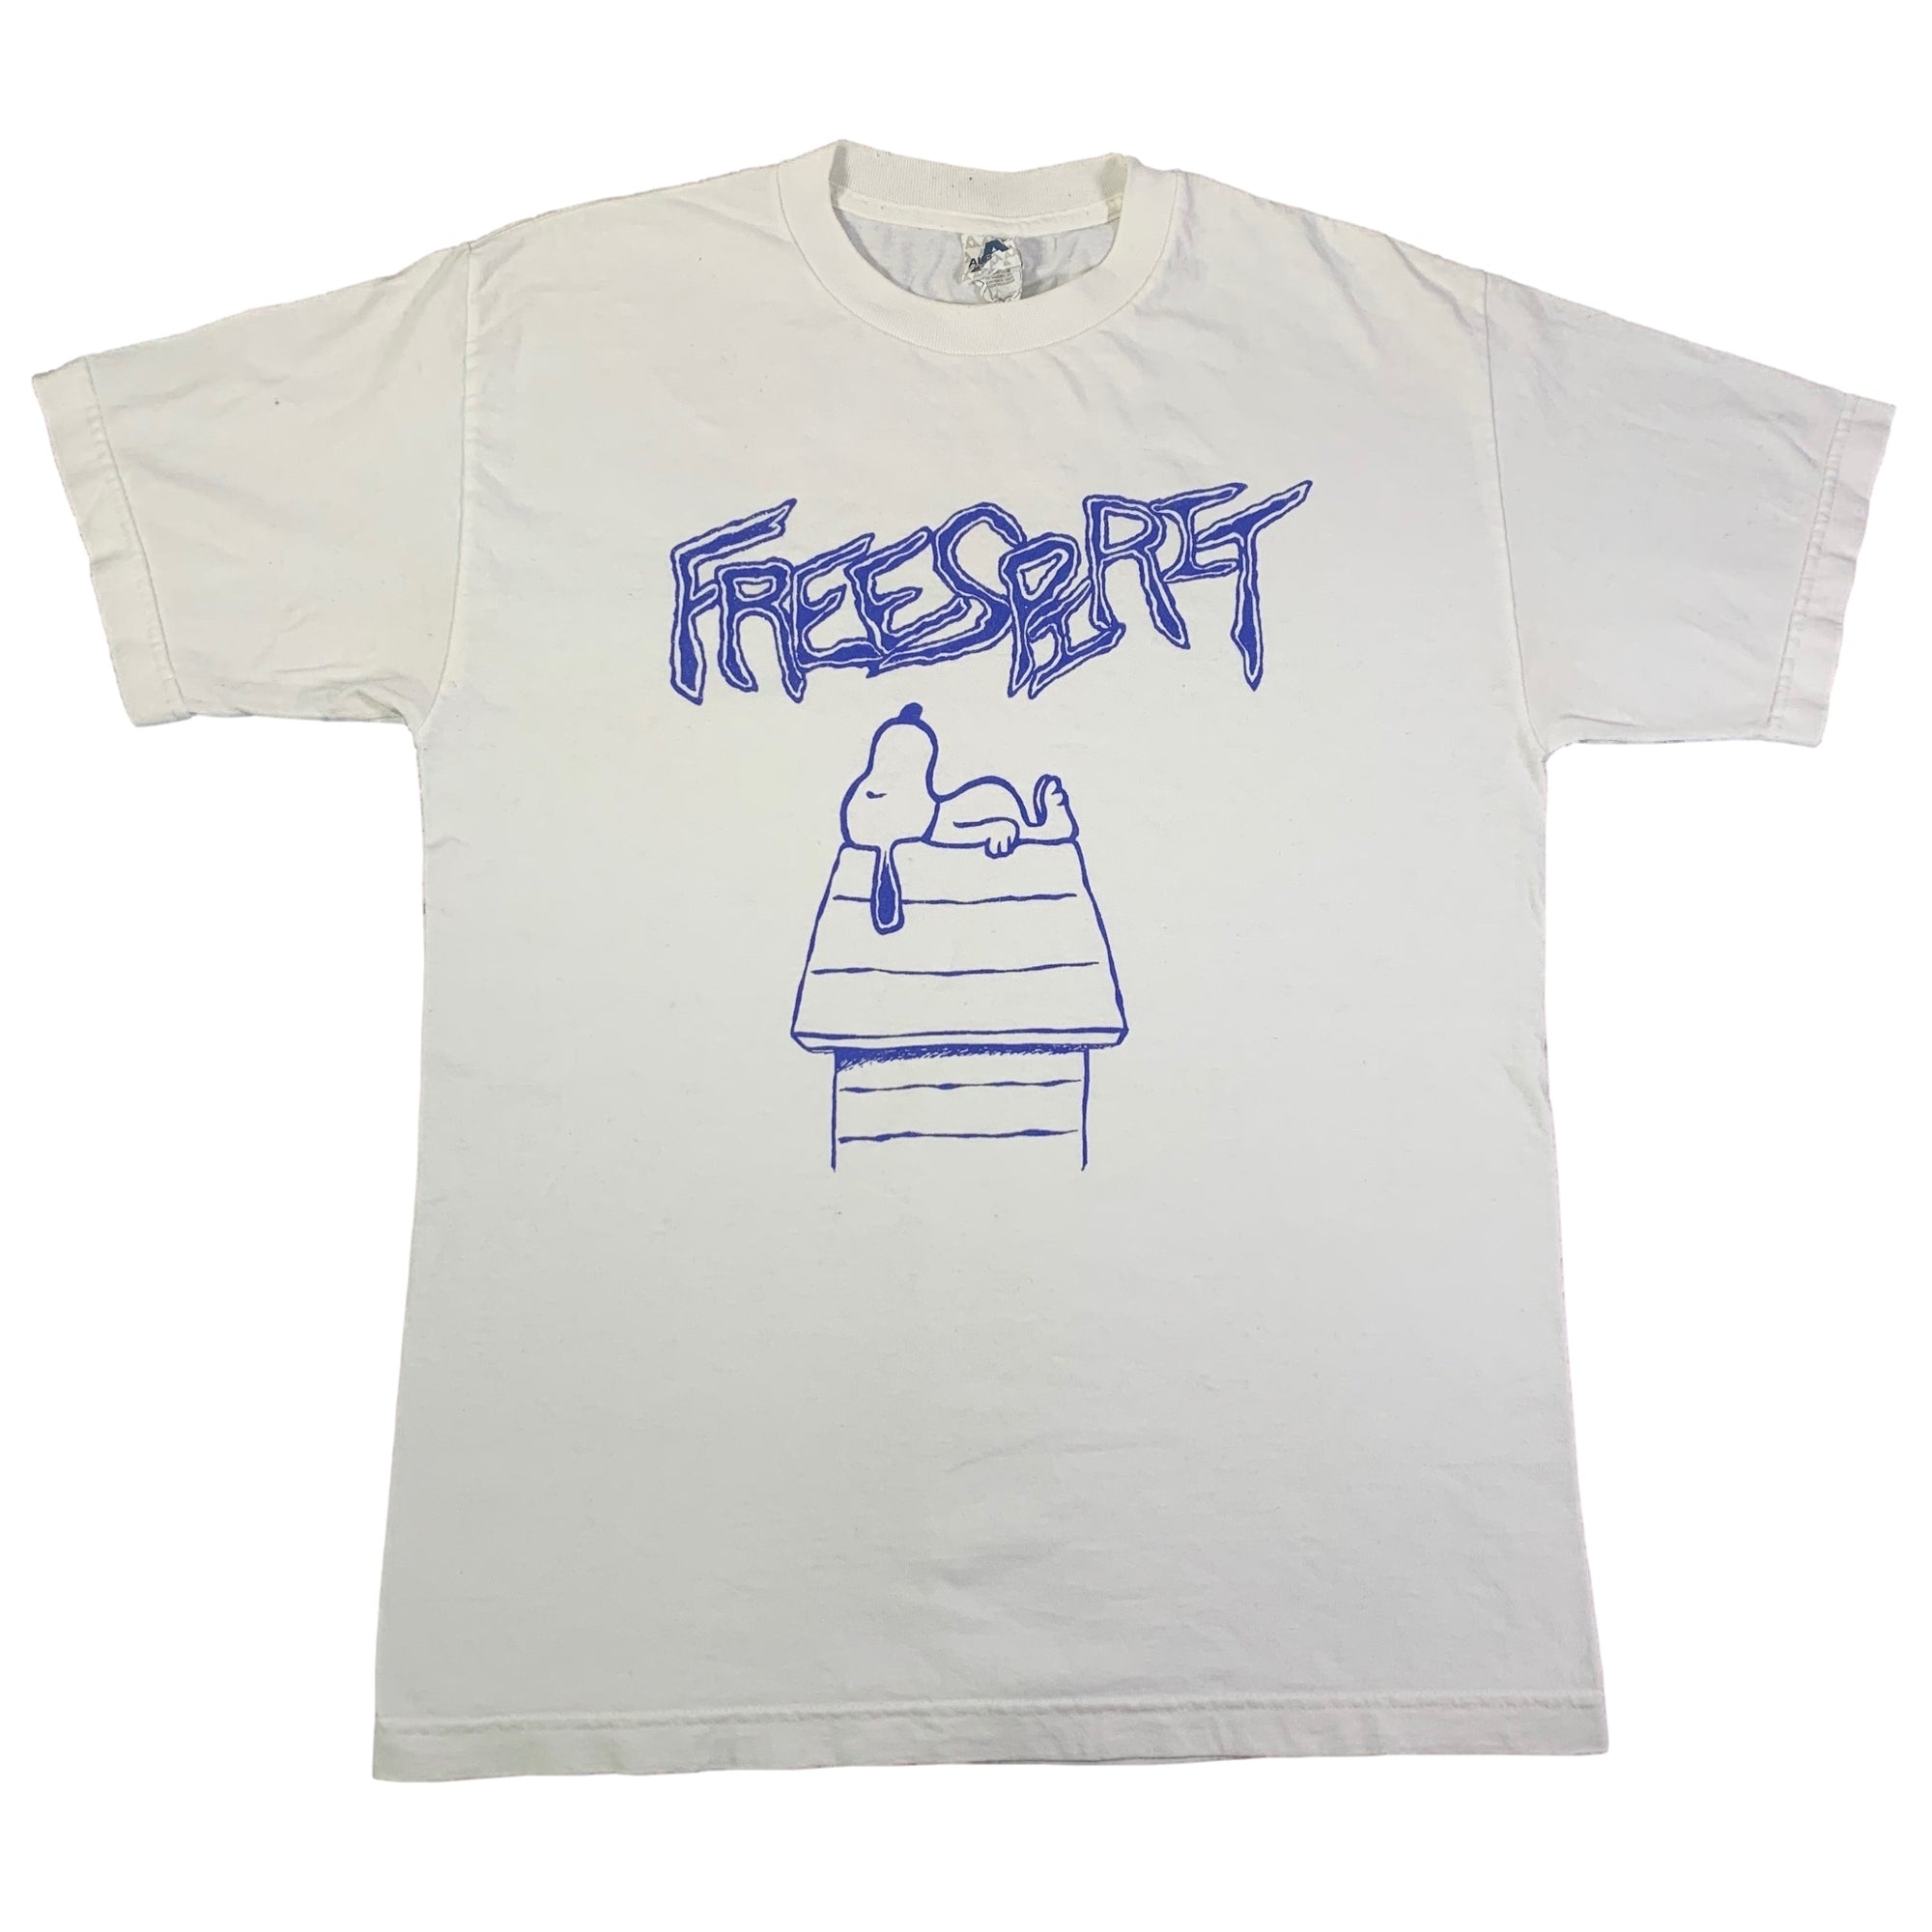 Vintage Free Spirit "Snoopy" T-Shirt - jointcustodydc